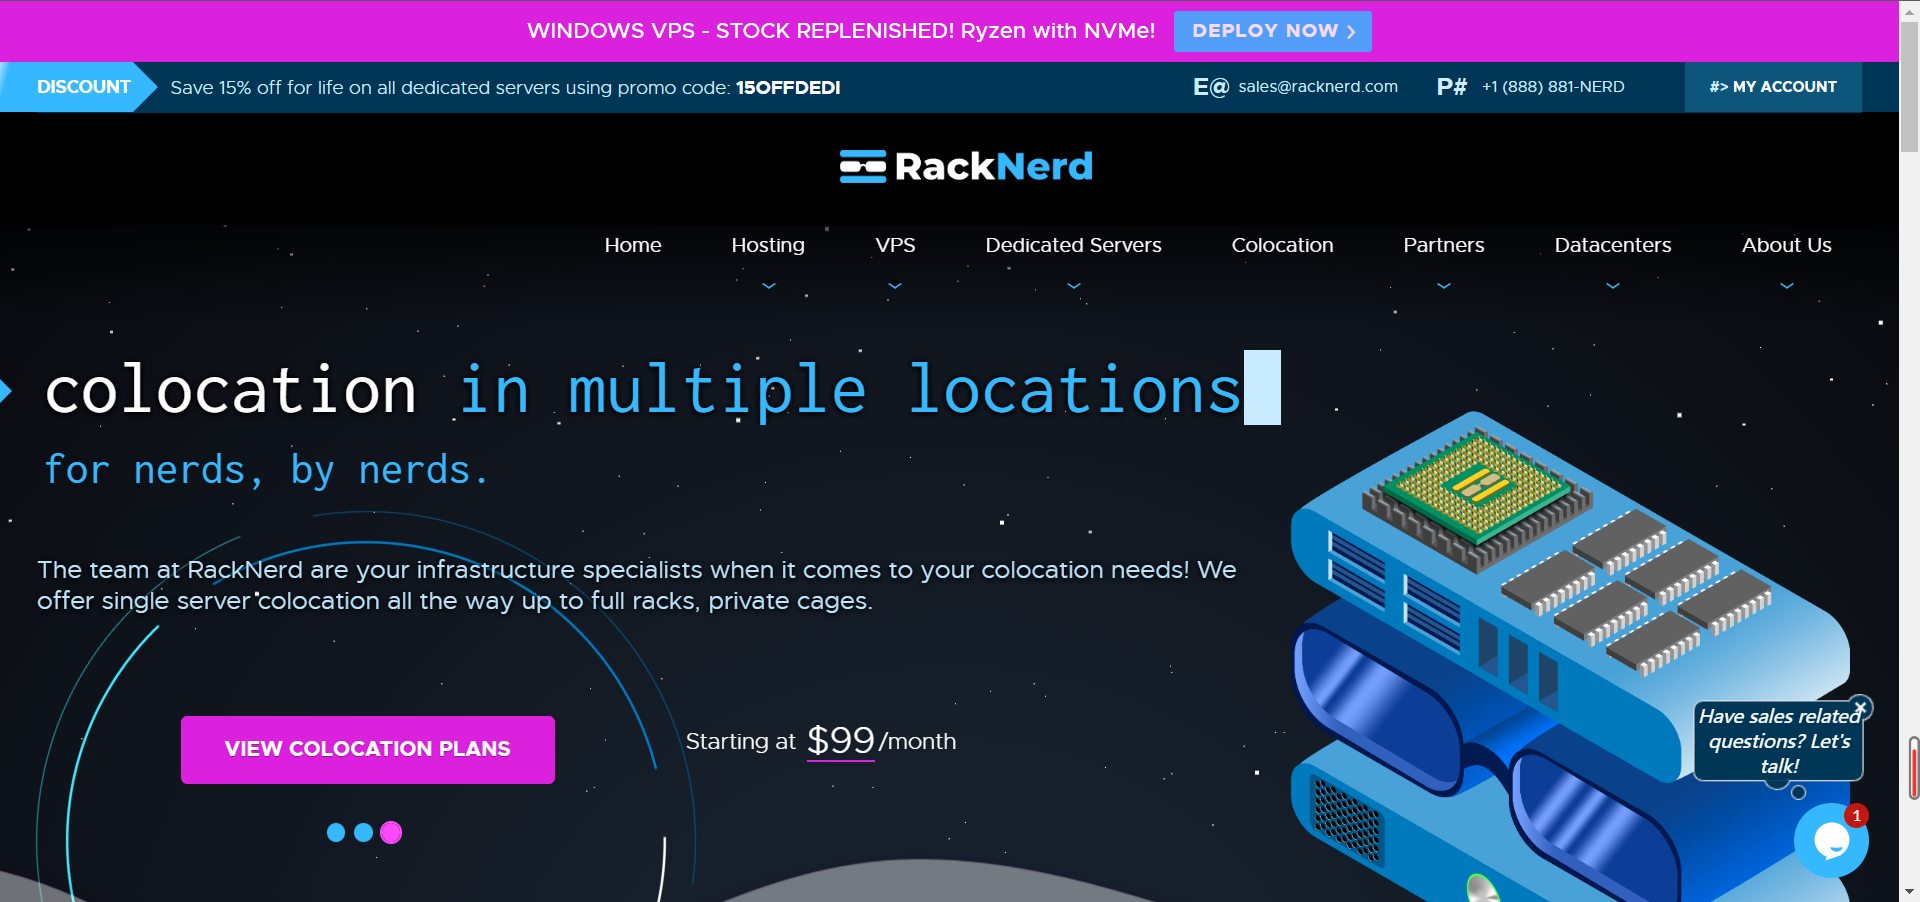 RackNerd发布了2022年的美国独立日的促销活动，这次优惠仅有美国西雅图VPS，服务器统一的1Gbps带宽，最低配年付$12.99起(1核/1G内存/15G SSD/1Gbps@2000G流量)